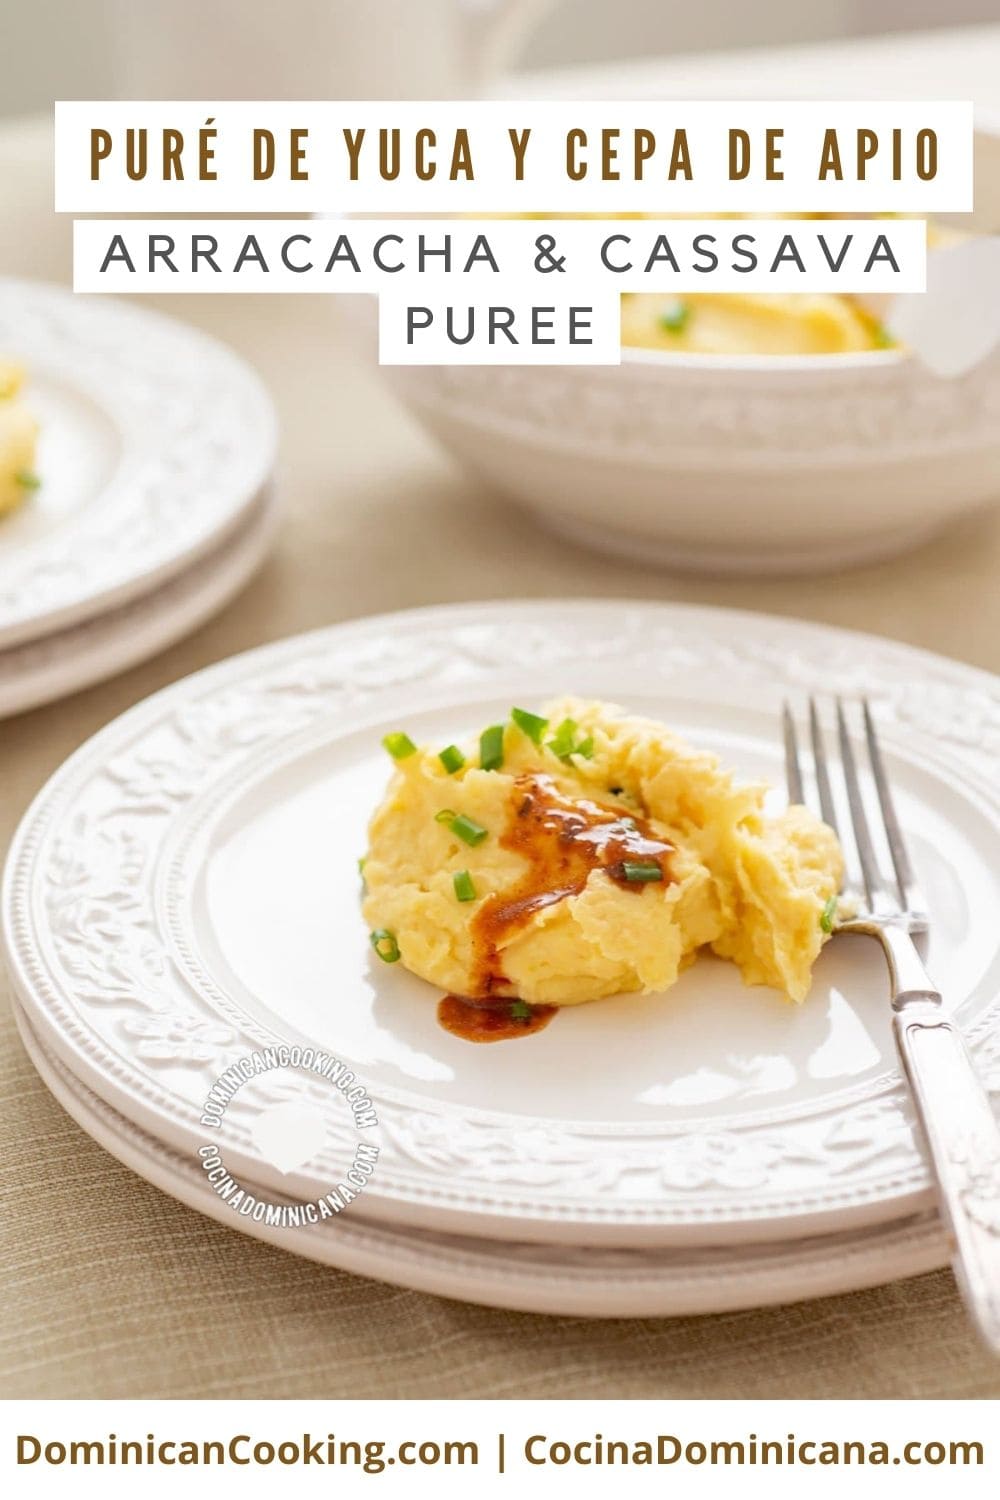 Cepa de Apio and Yuca Mash (Arracacha and Cassava Puree) recipe.